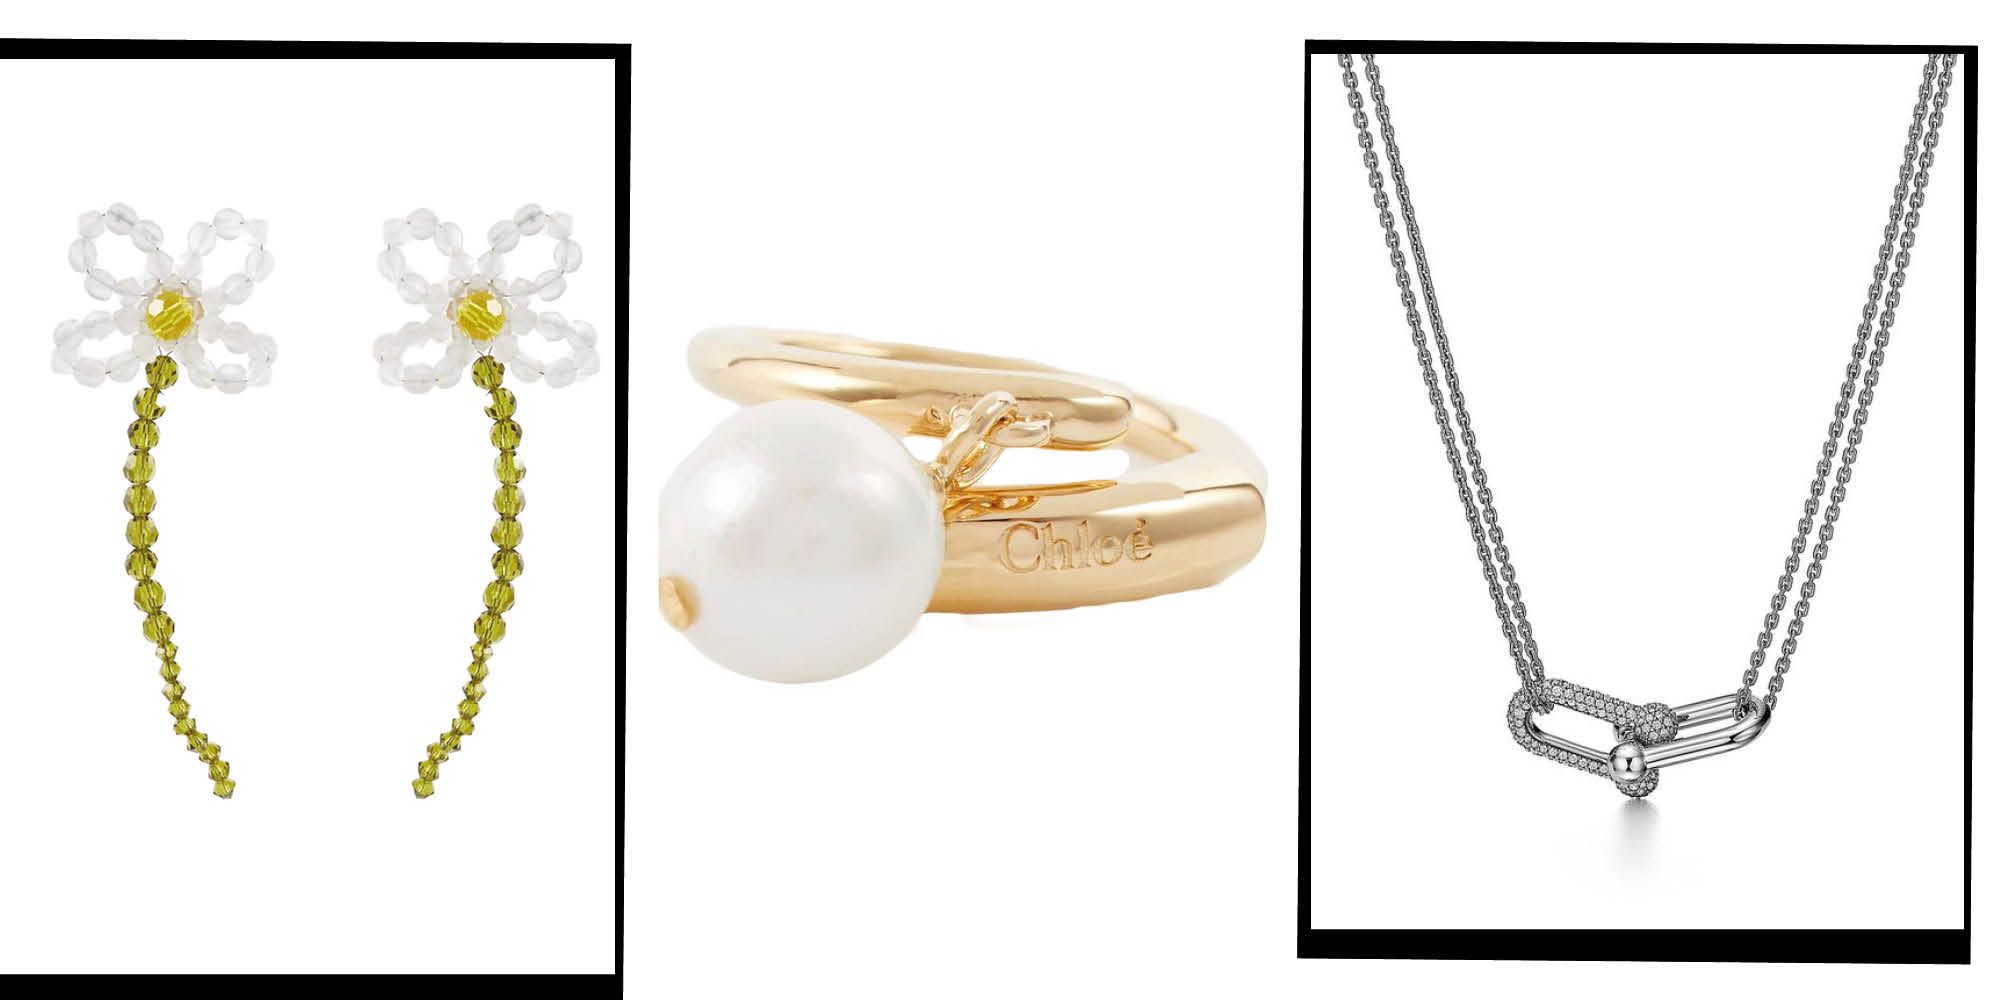 Cruiser Earrings - Luxury All Fashion Jewelry - Fashion Jewelry